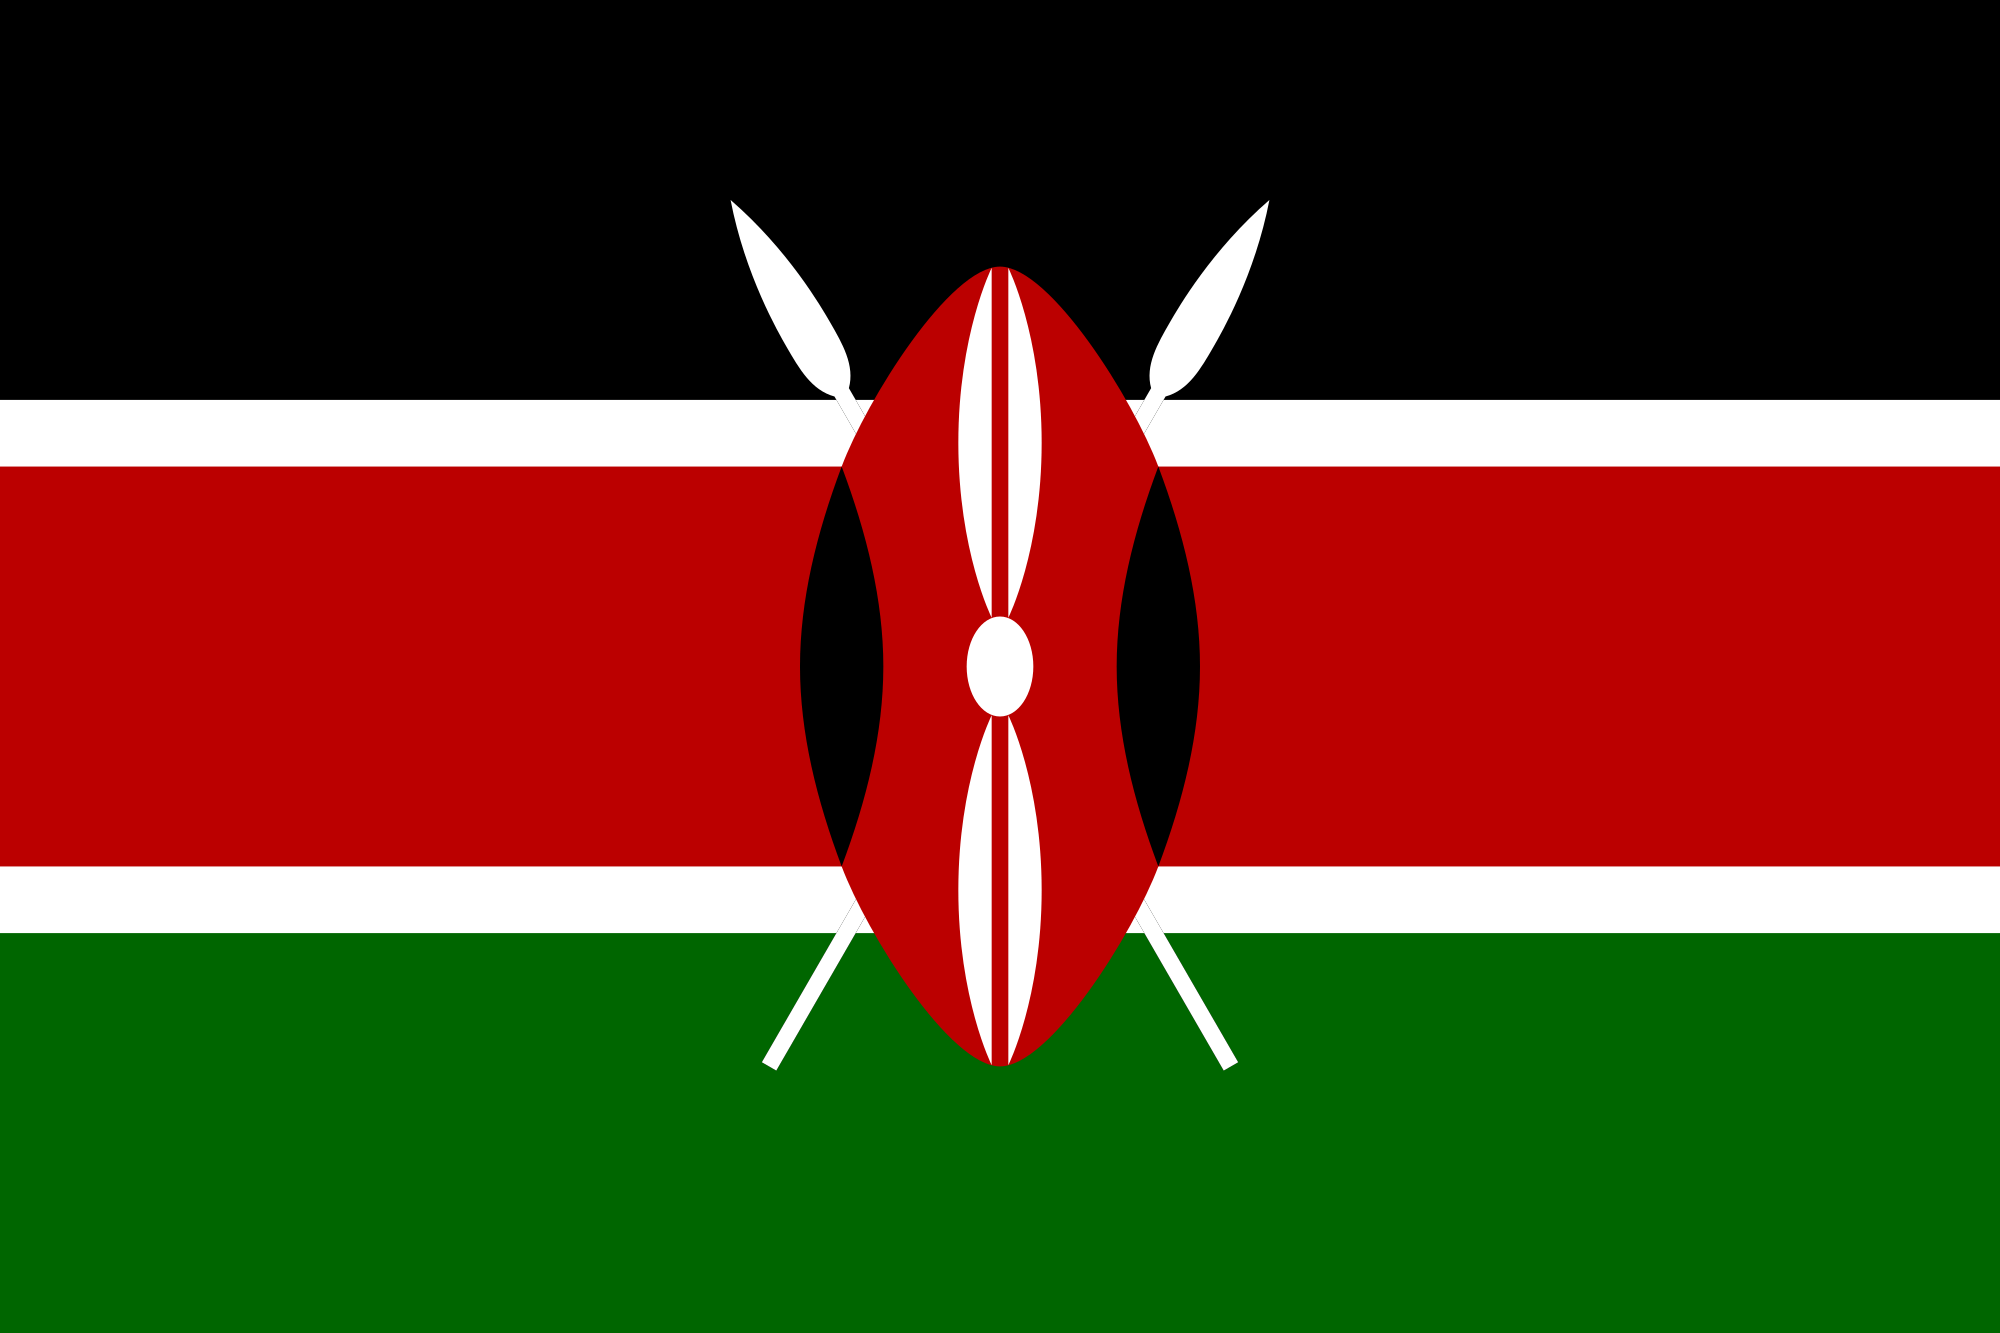 Black and Red Spear Logo - Flag of Kenya